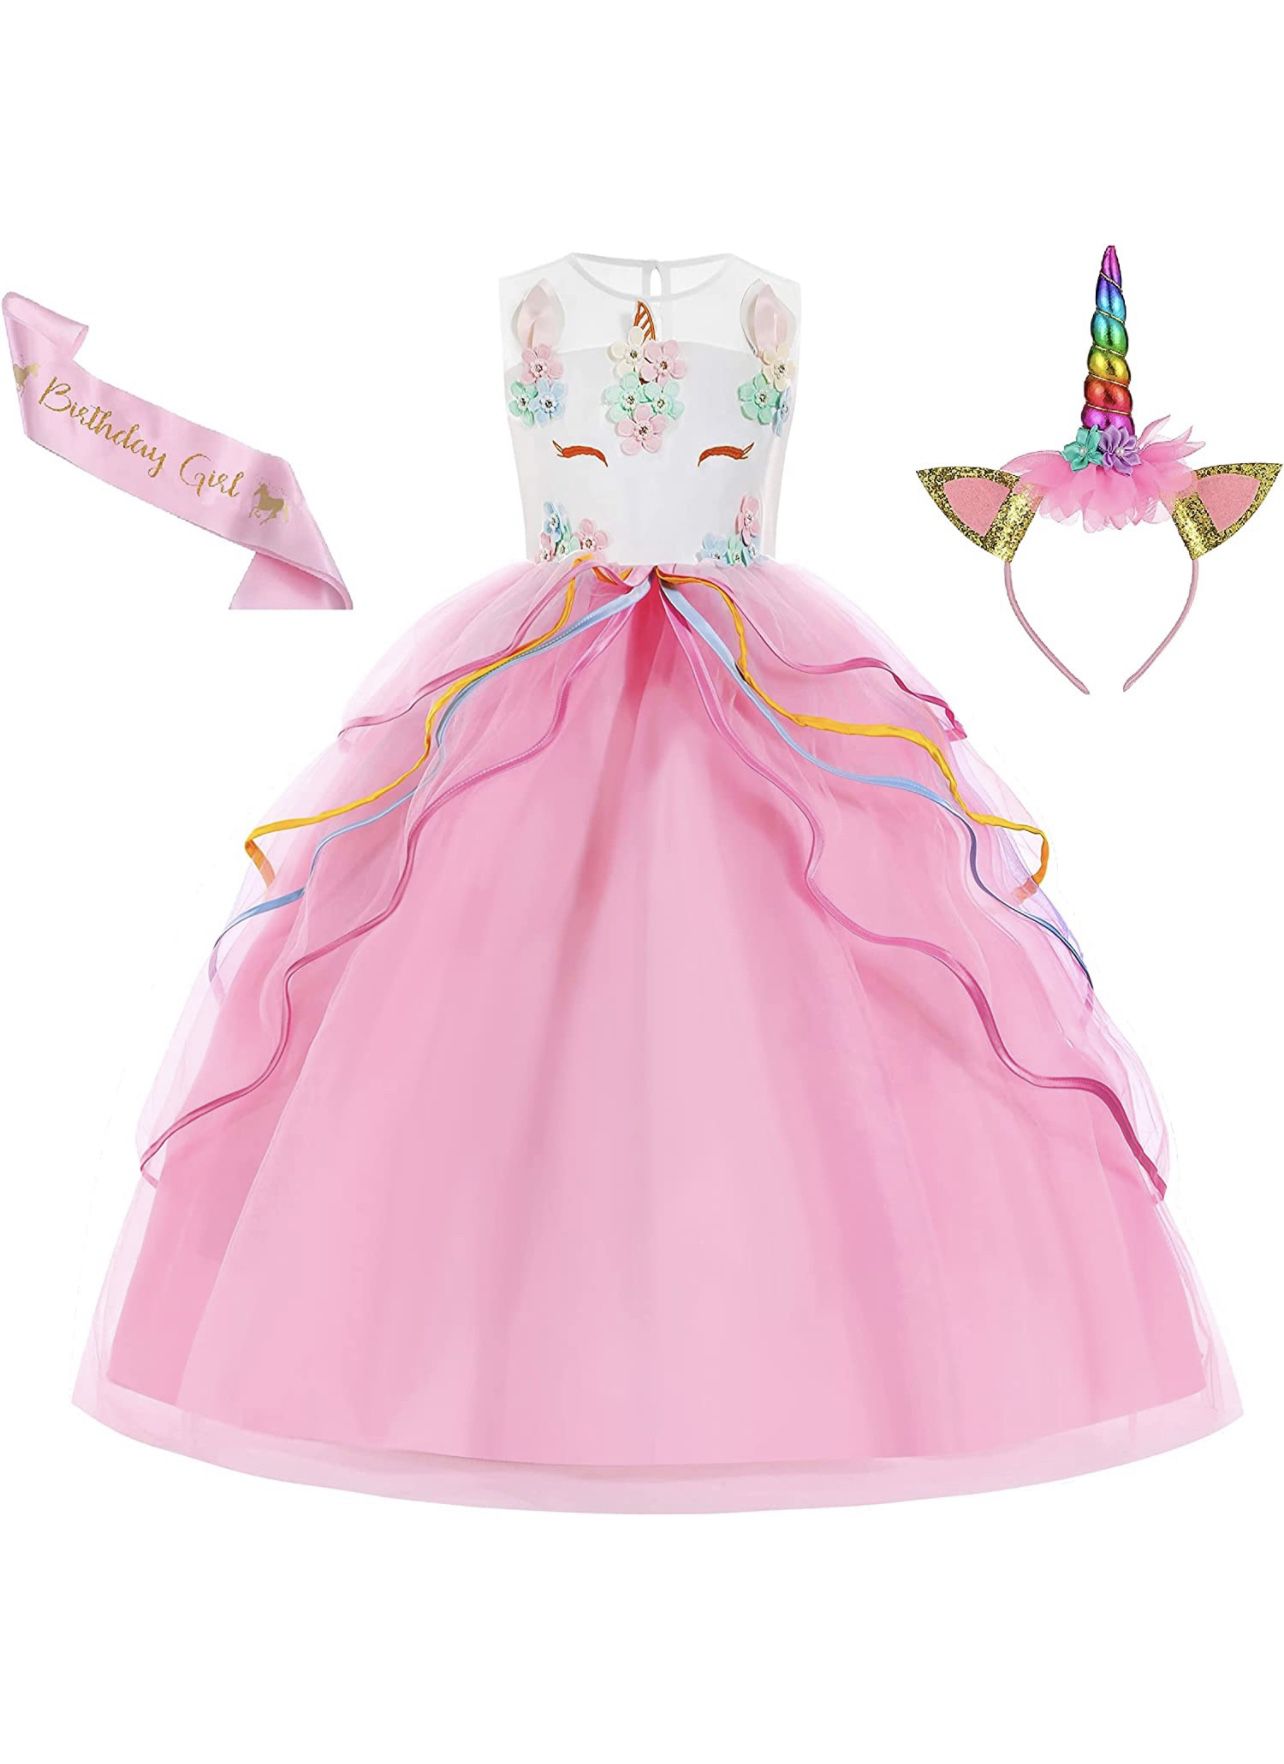 Brandnew  Unicorn Dress for Girls Unicorn Costume with Headband & Satin Sash for Birthday Party(14-15years)